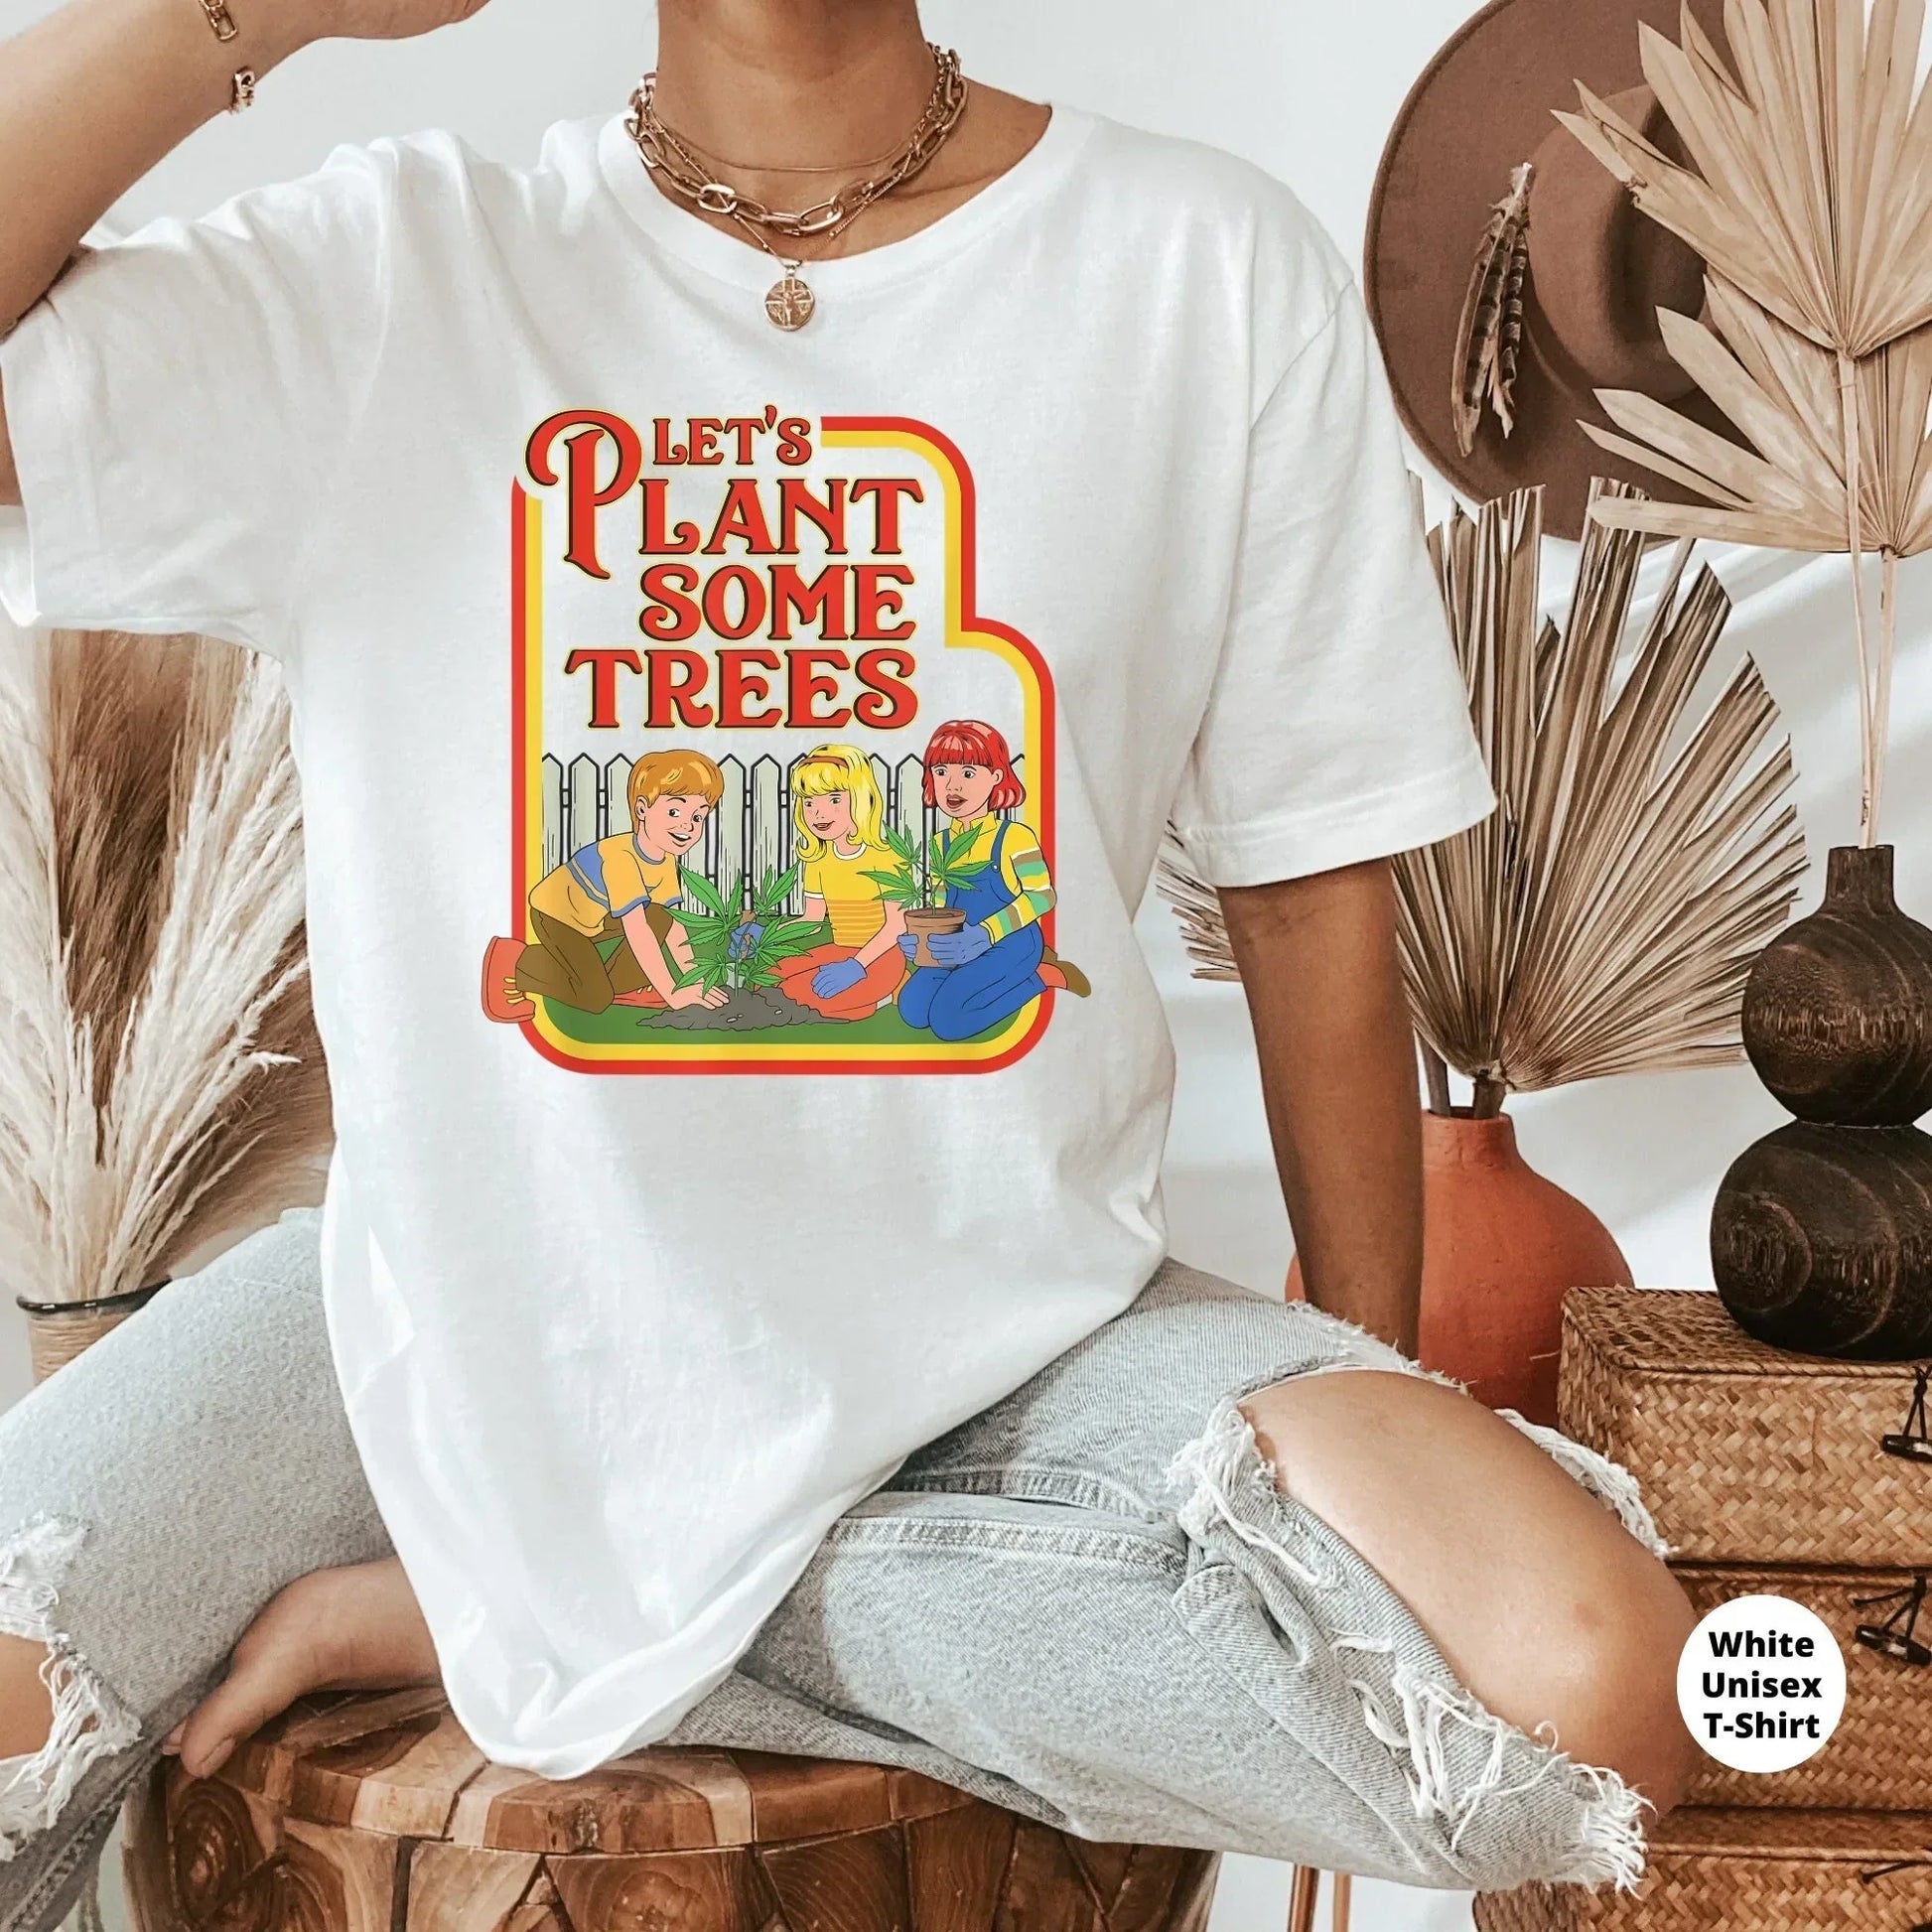 Let's Plant Some Trees, Funny Retro Stoner Shirt HMDesignStudioUS